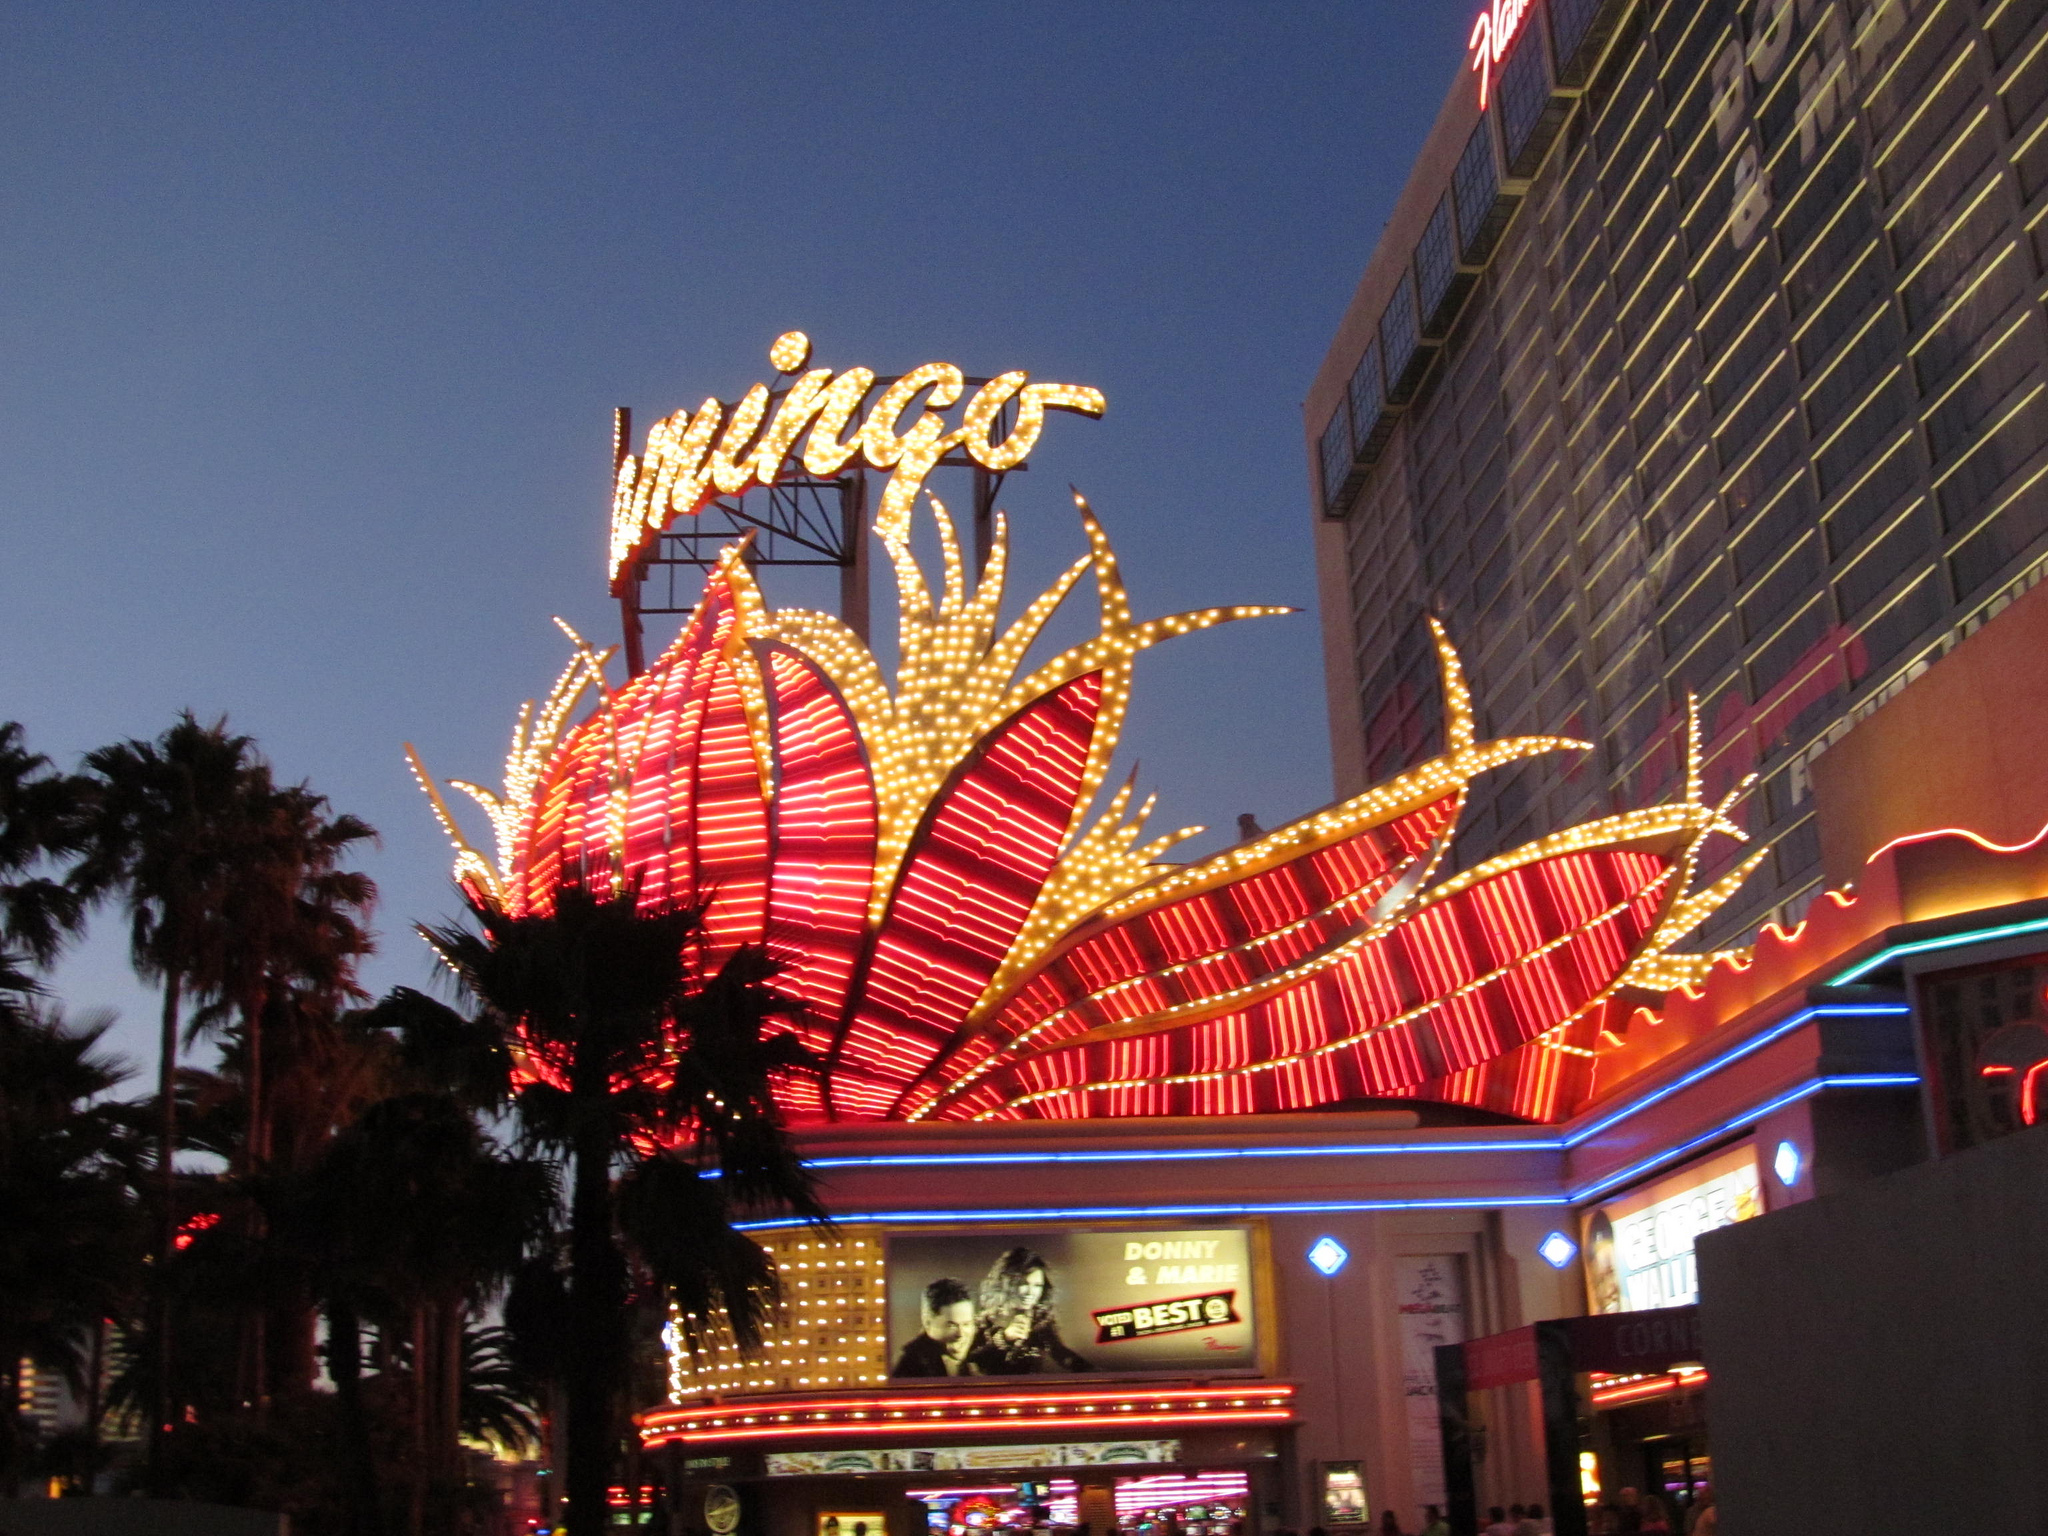 The Flamingo Las Vegas